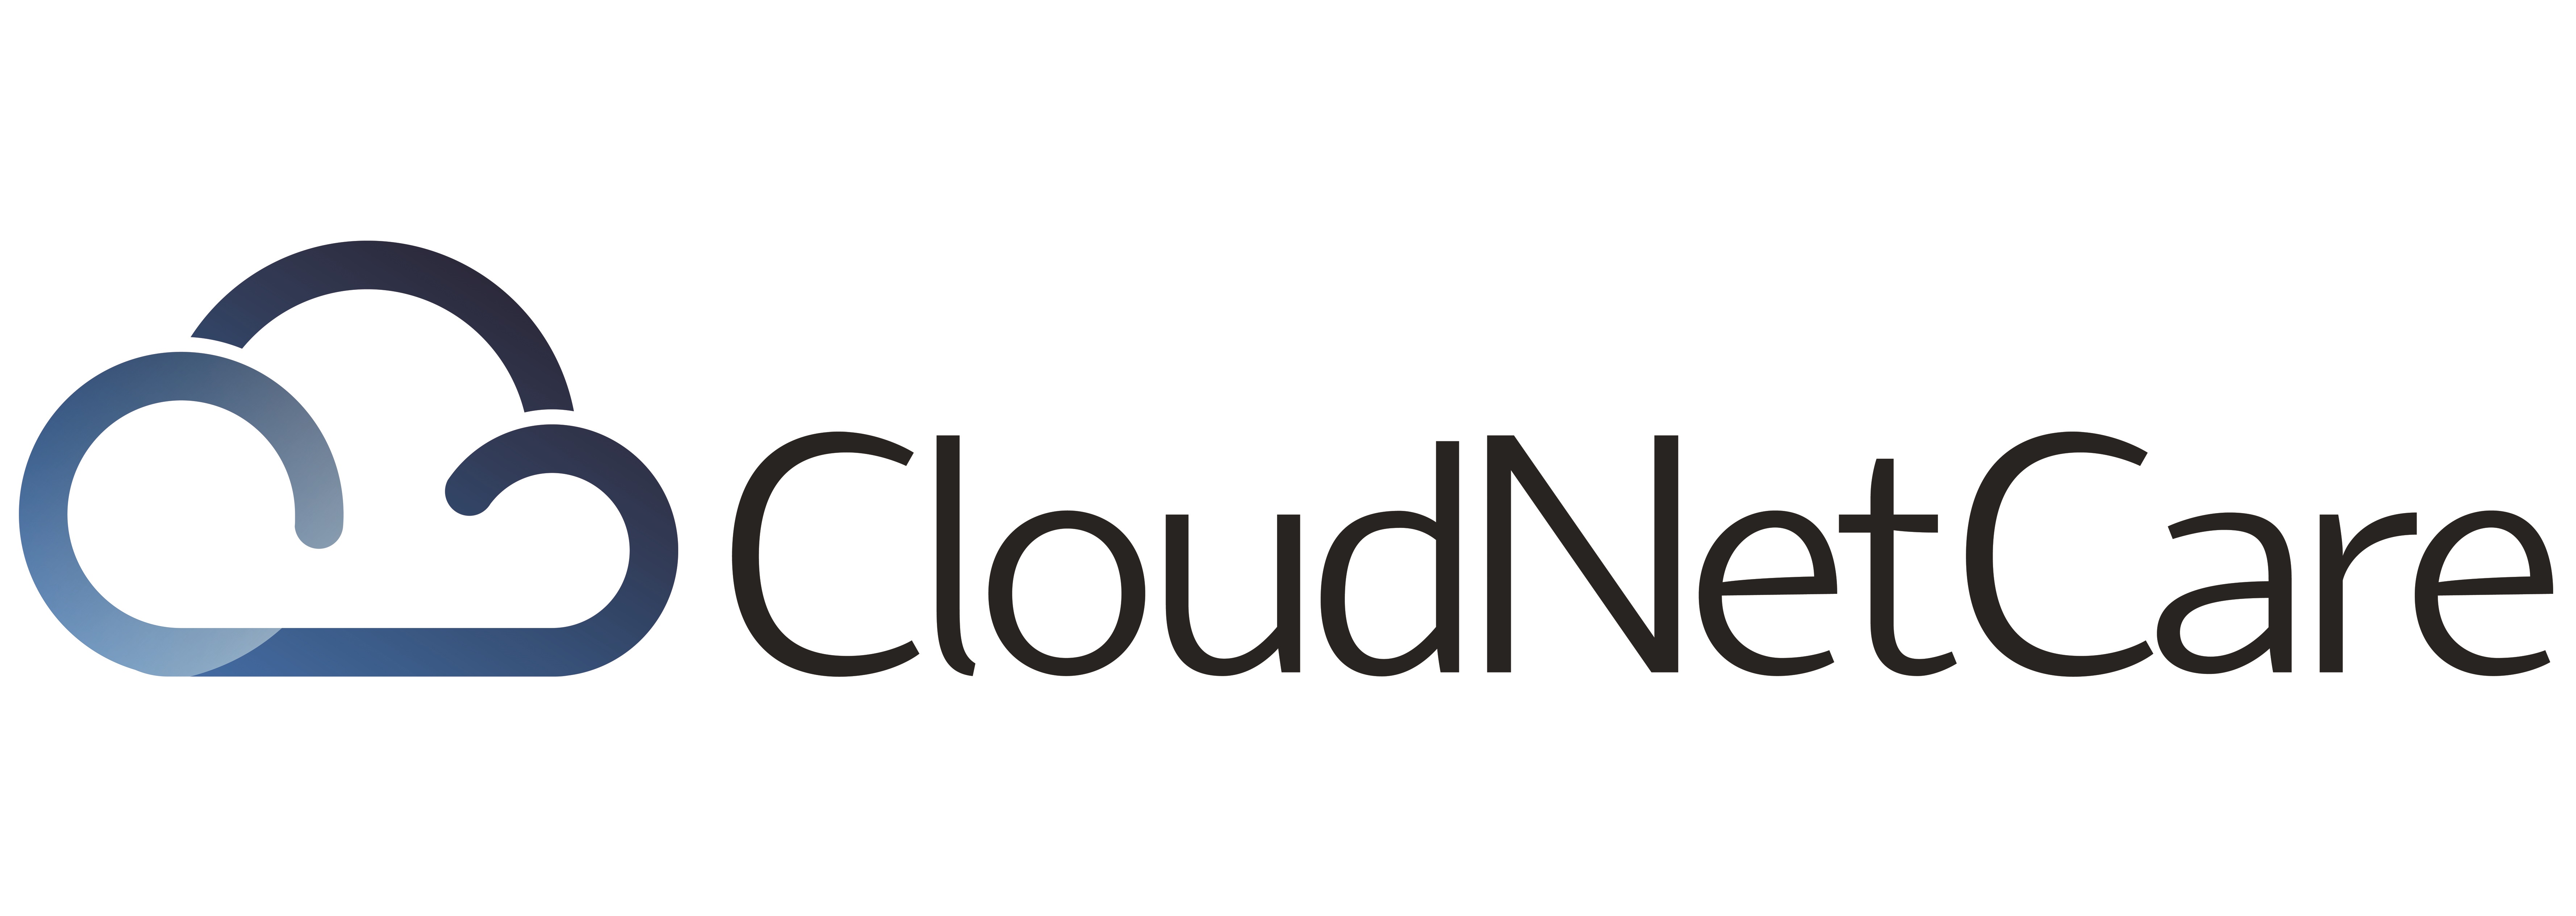 Logo CloudNetcare